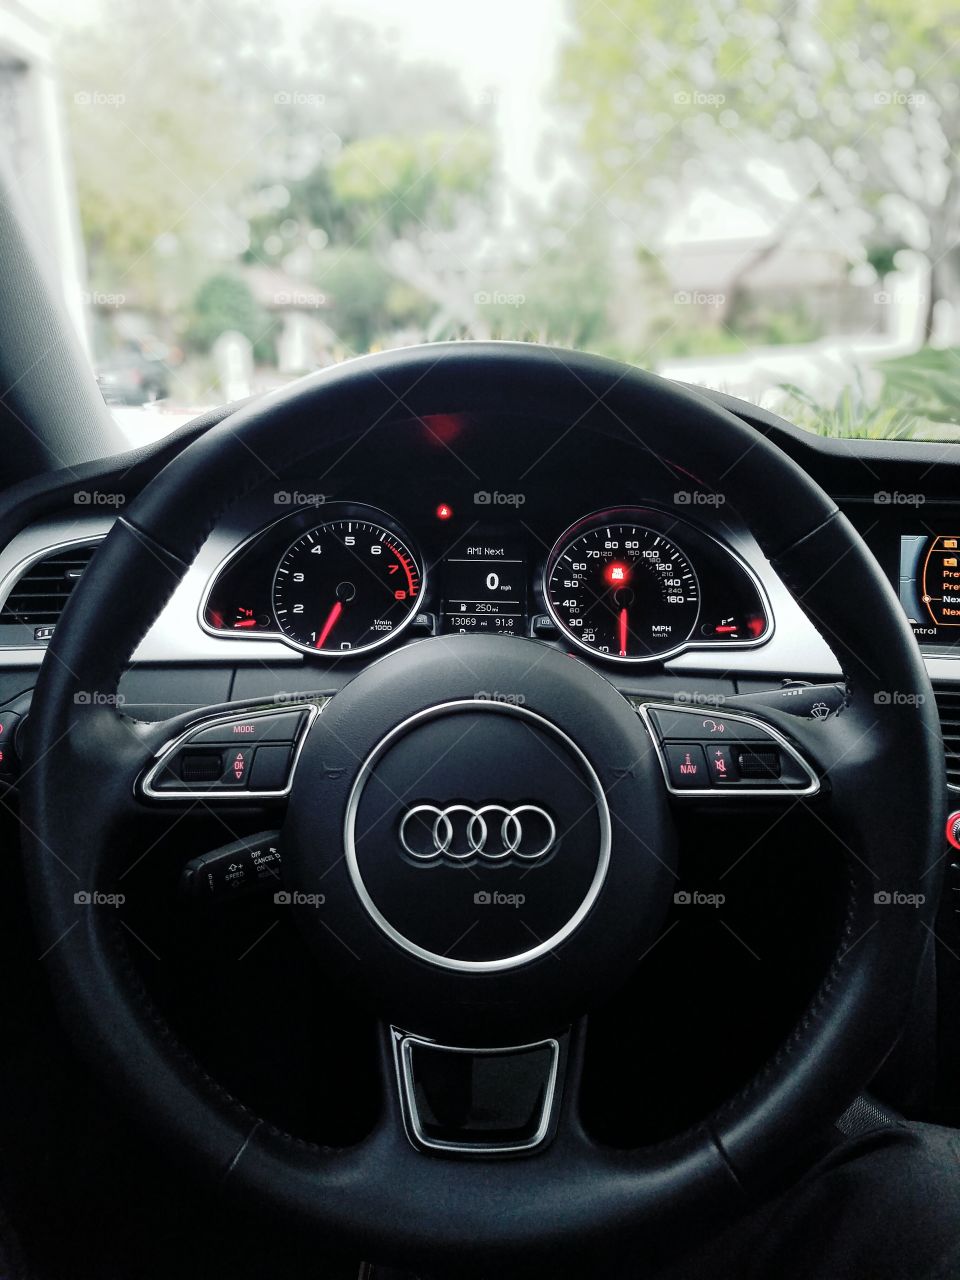 Audi A5 Steering Wheel v2